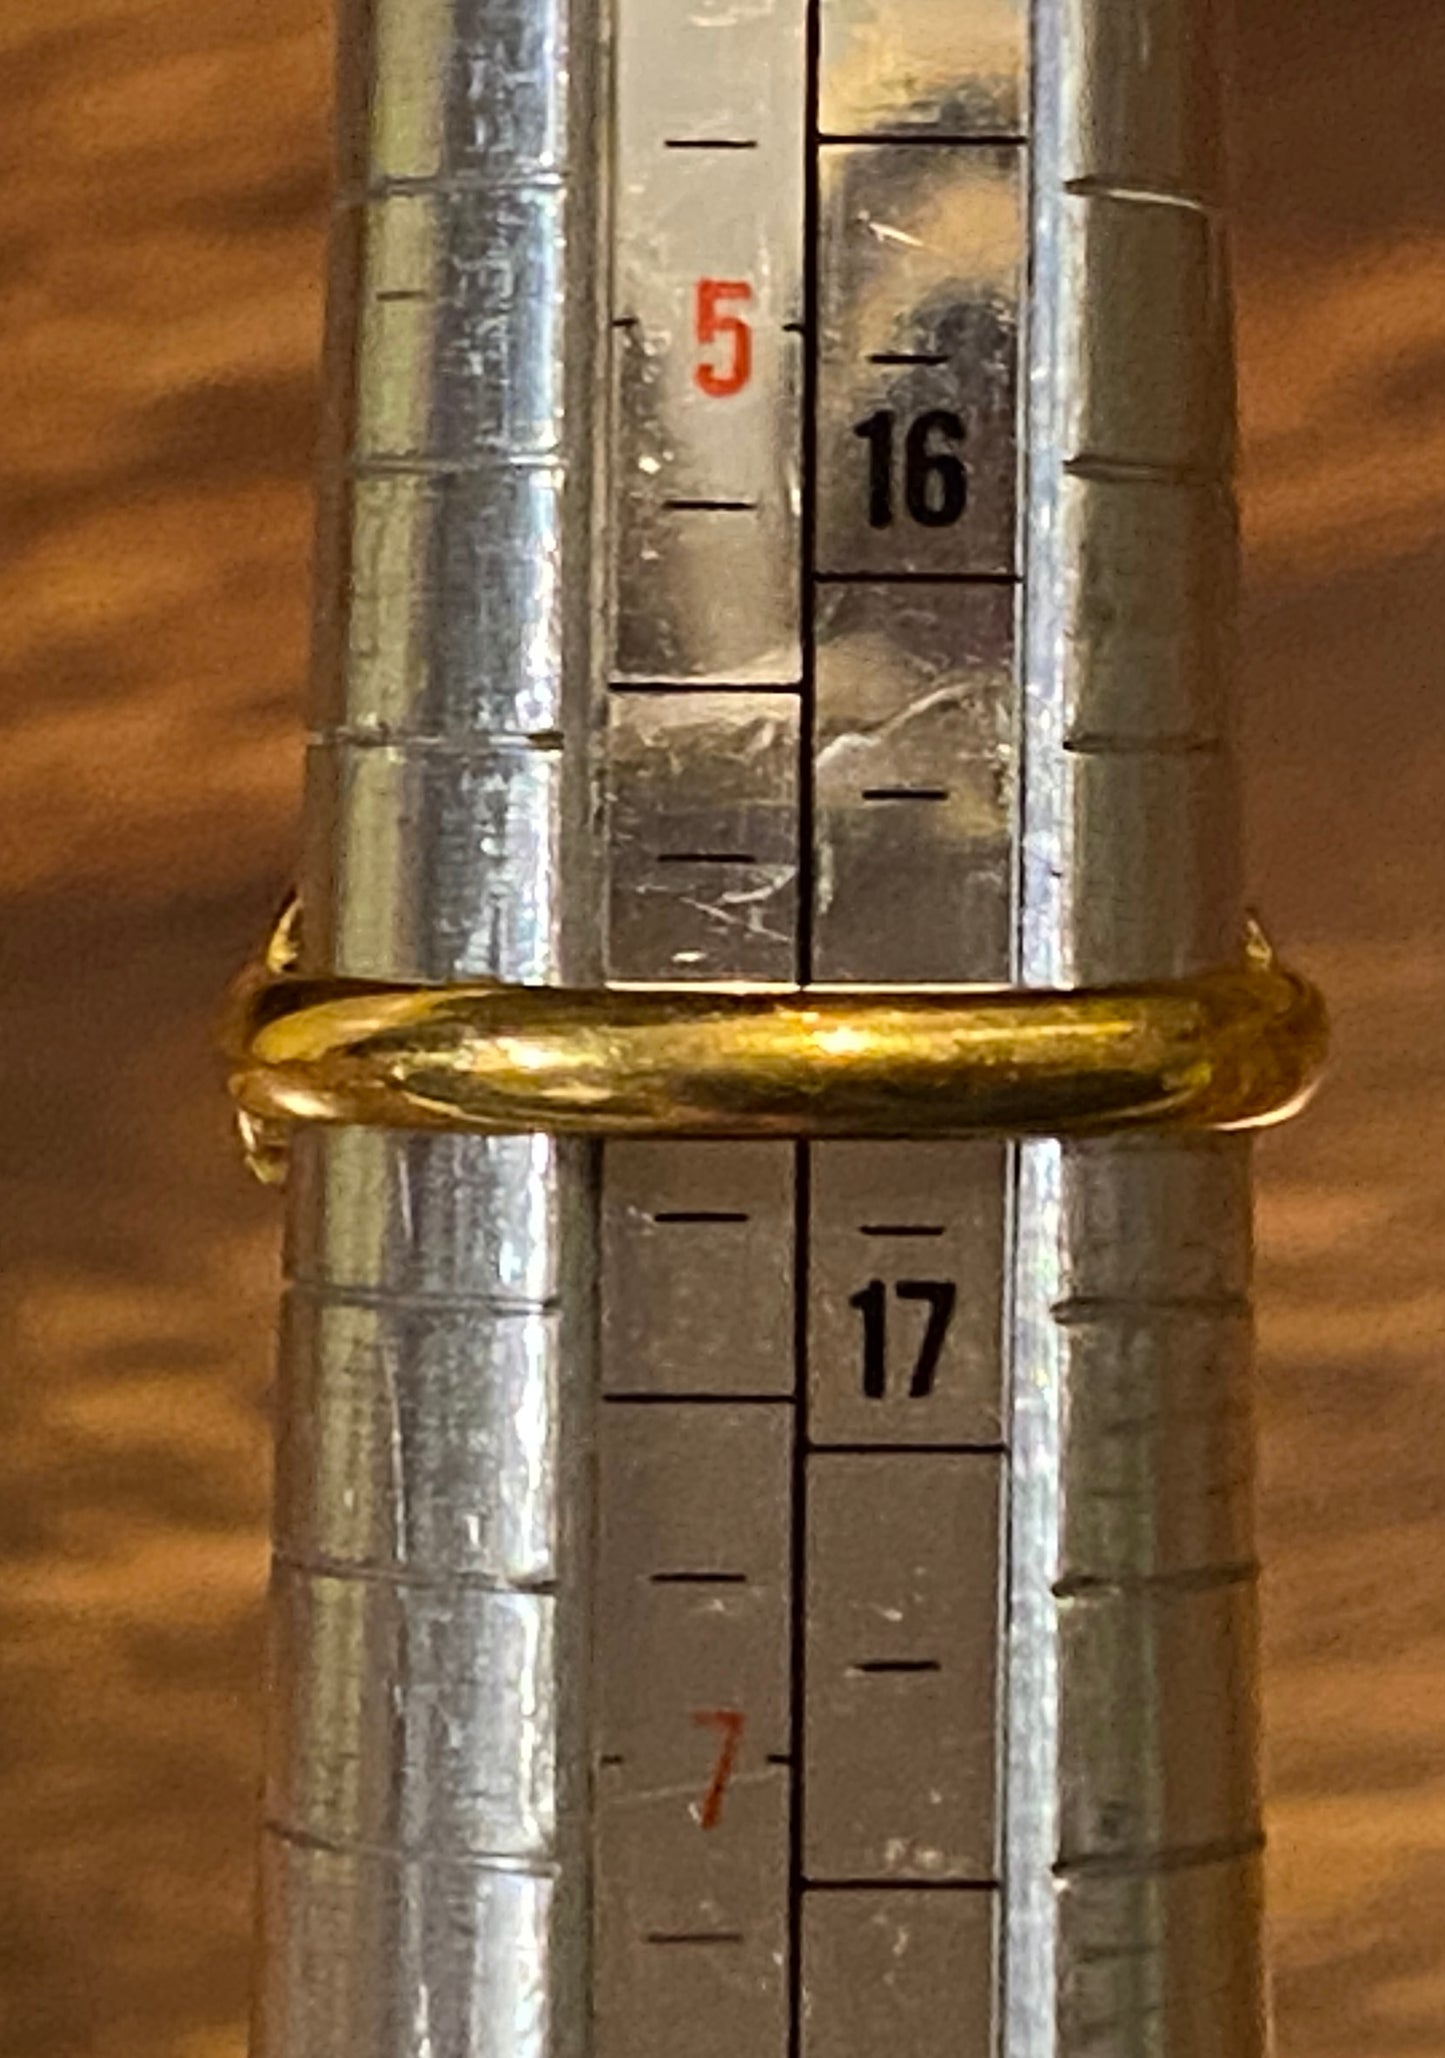 Vintage Gold Tone Ruffle Rhinestone Cocktail Ring Sz 6